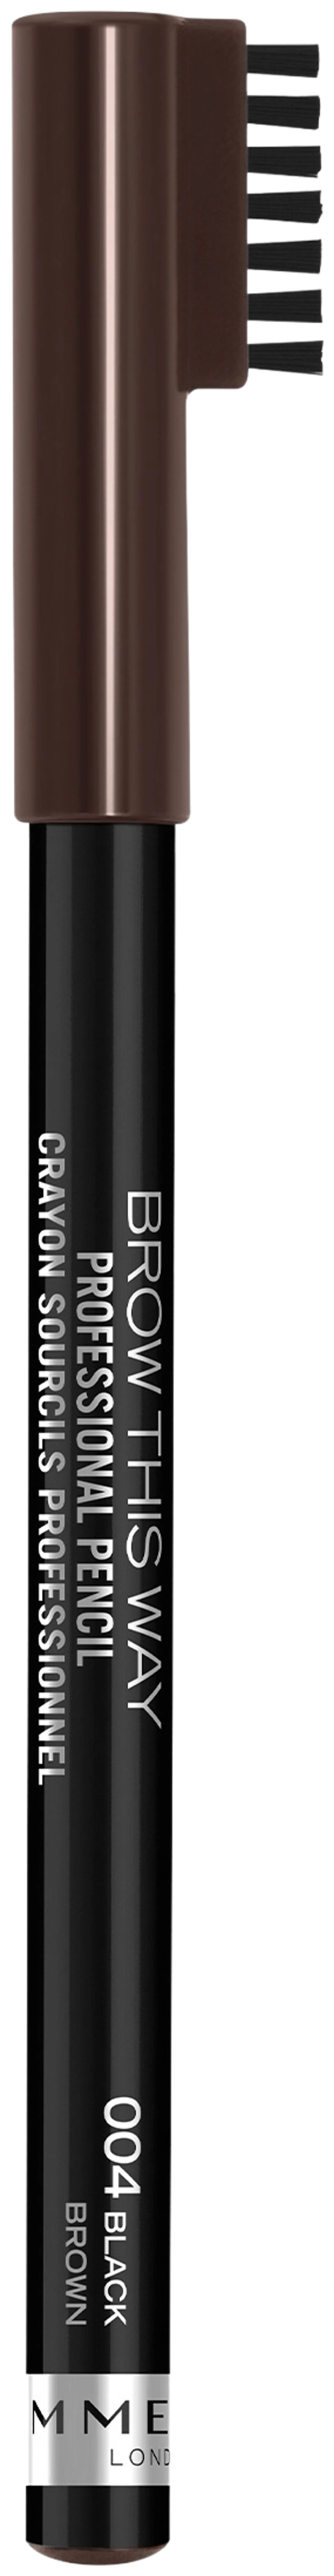 Rimmel 1,4g Professional Eyebrow Pencil 004 Black kulmakynä - 1